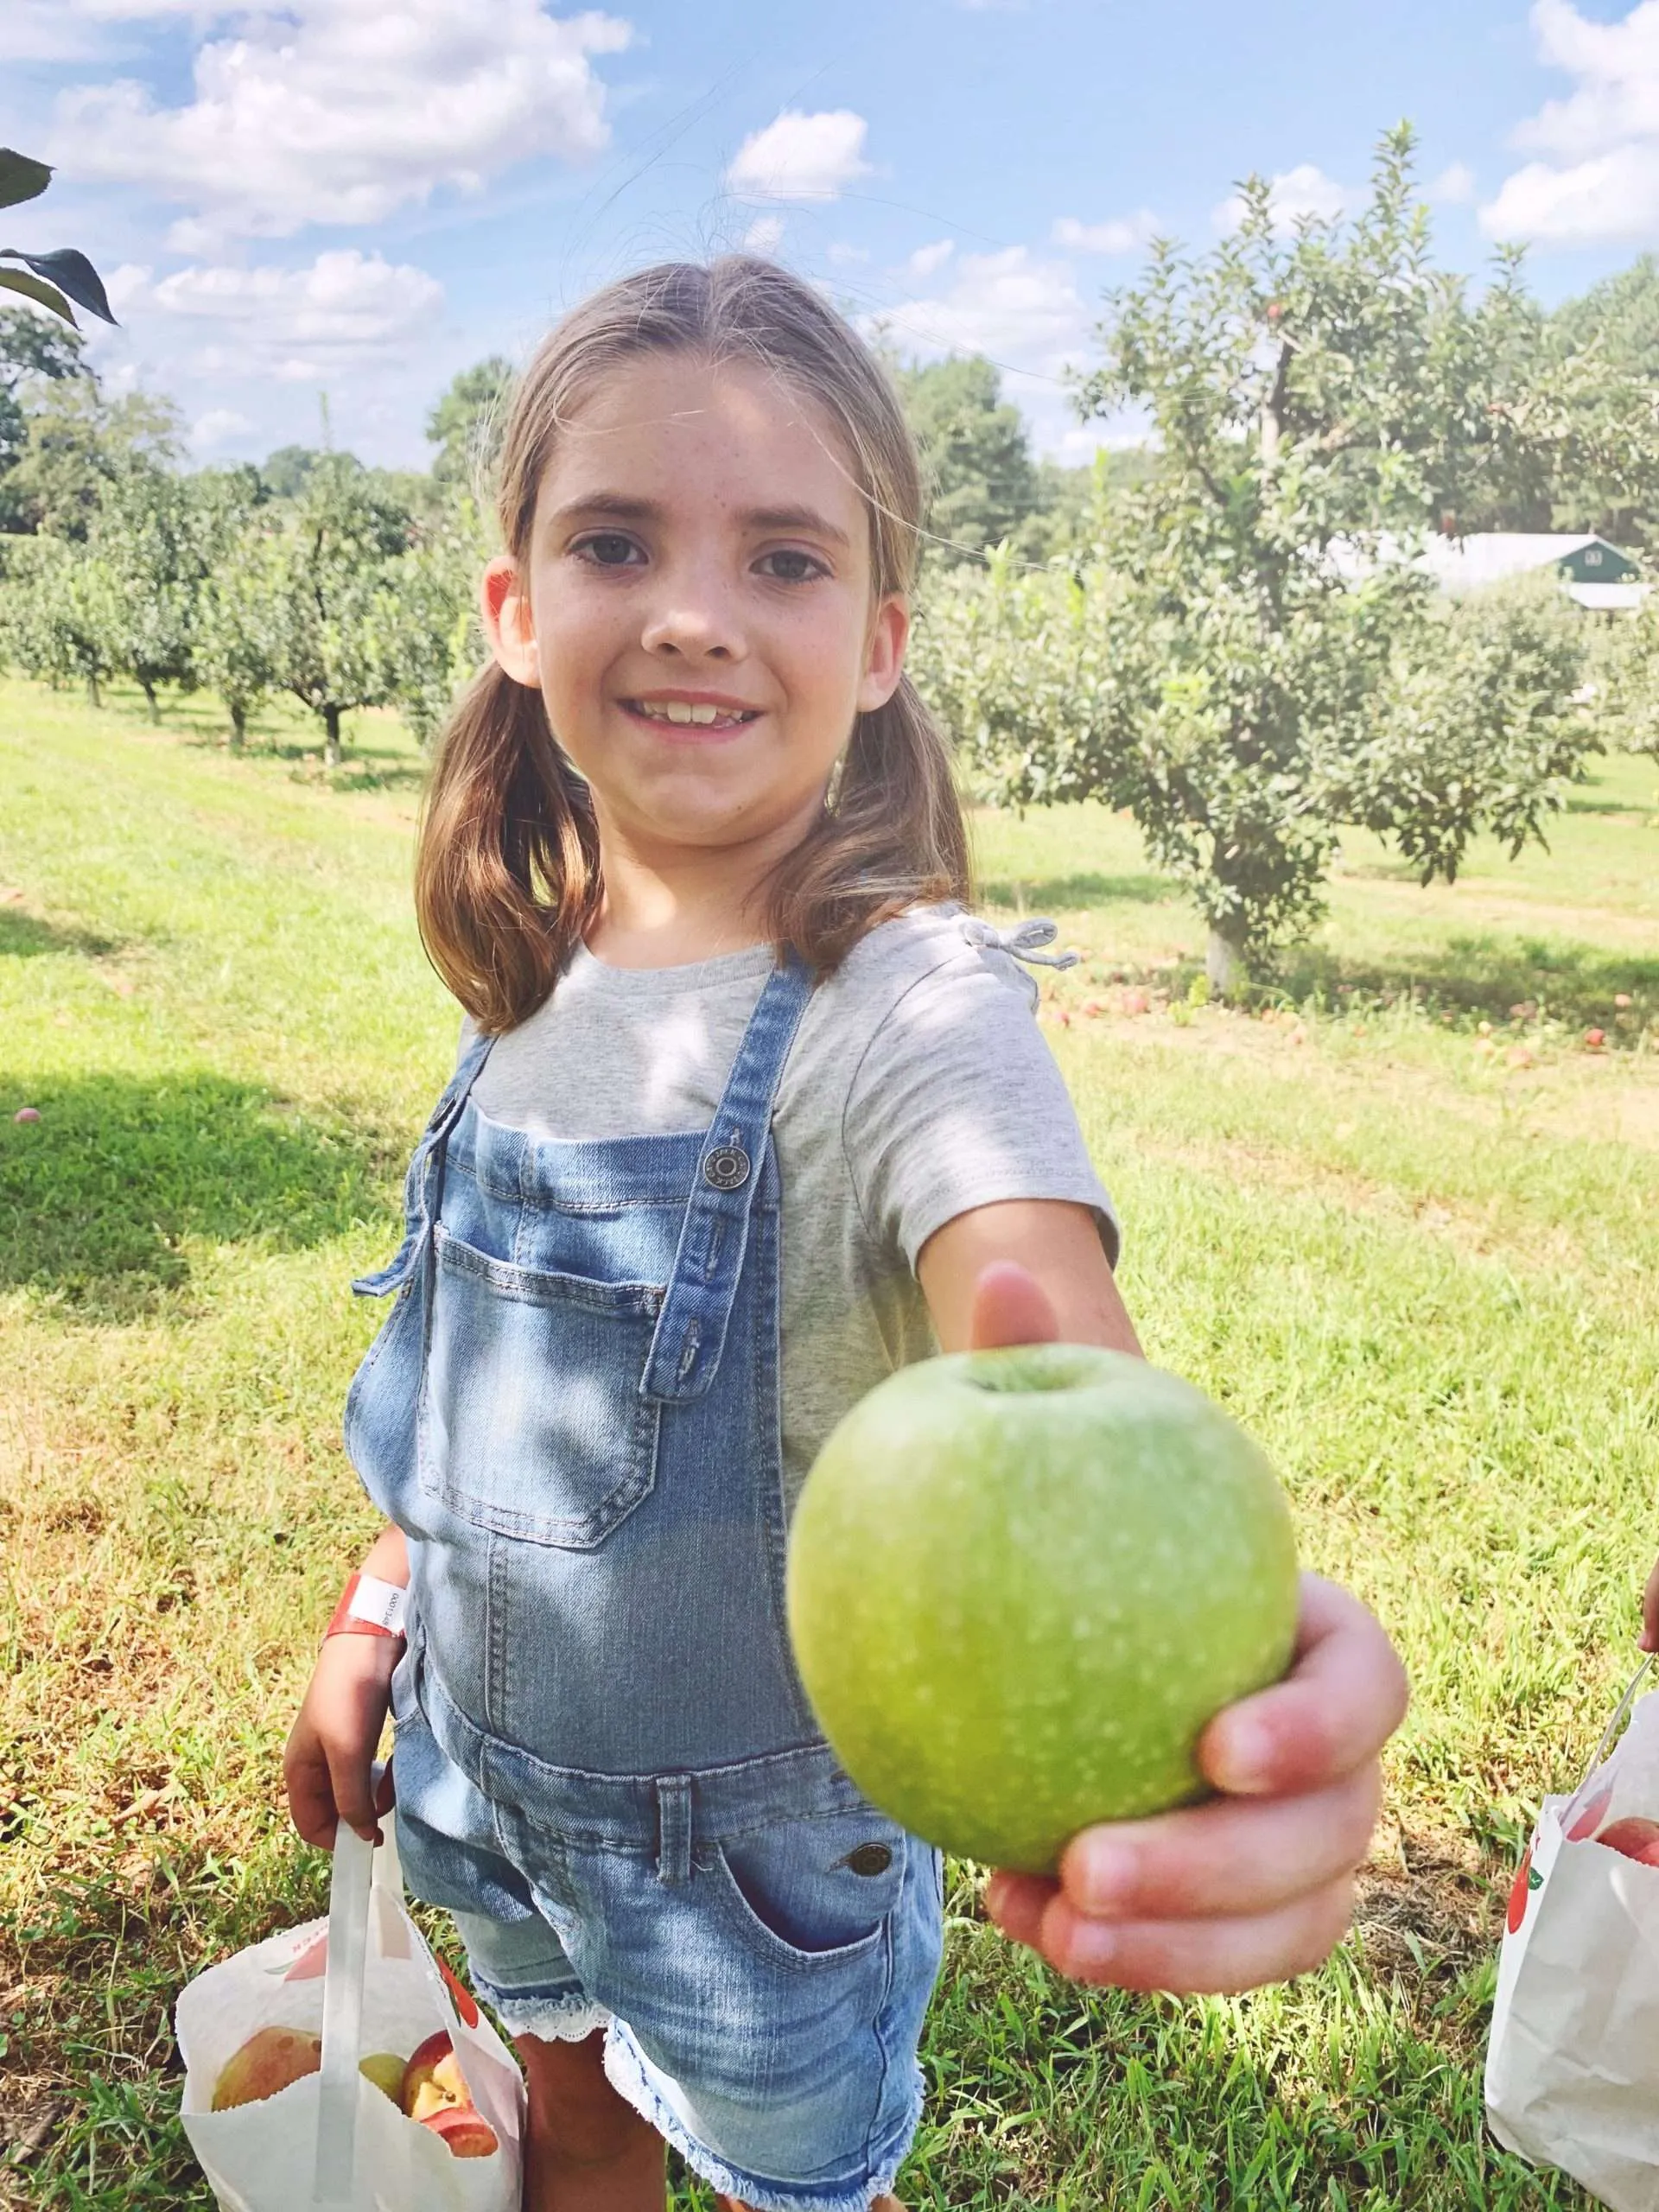 Picking apples near Fort Bragg, North Carolina.